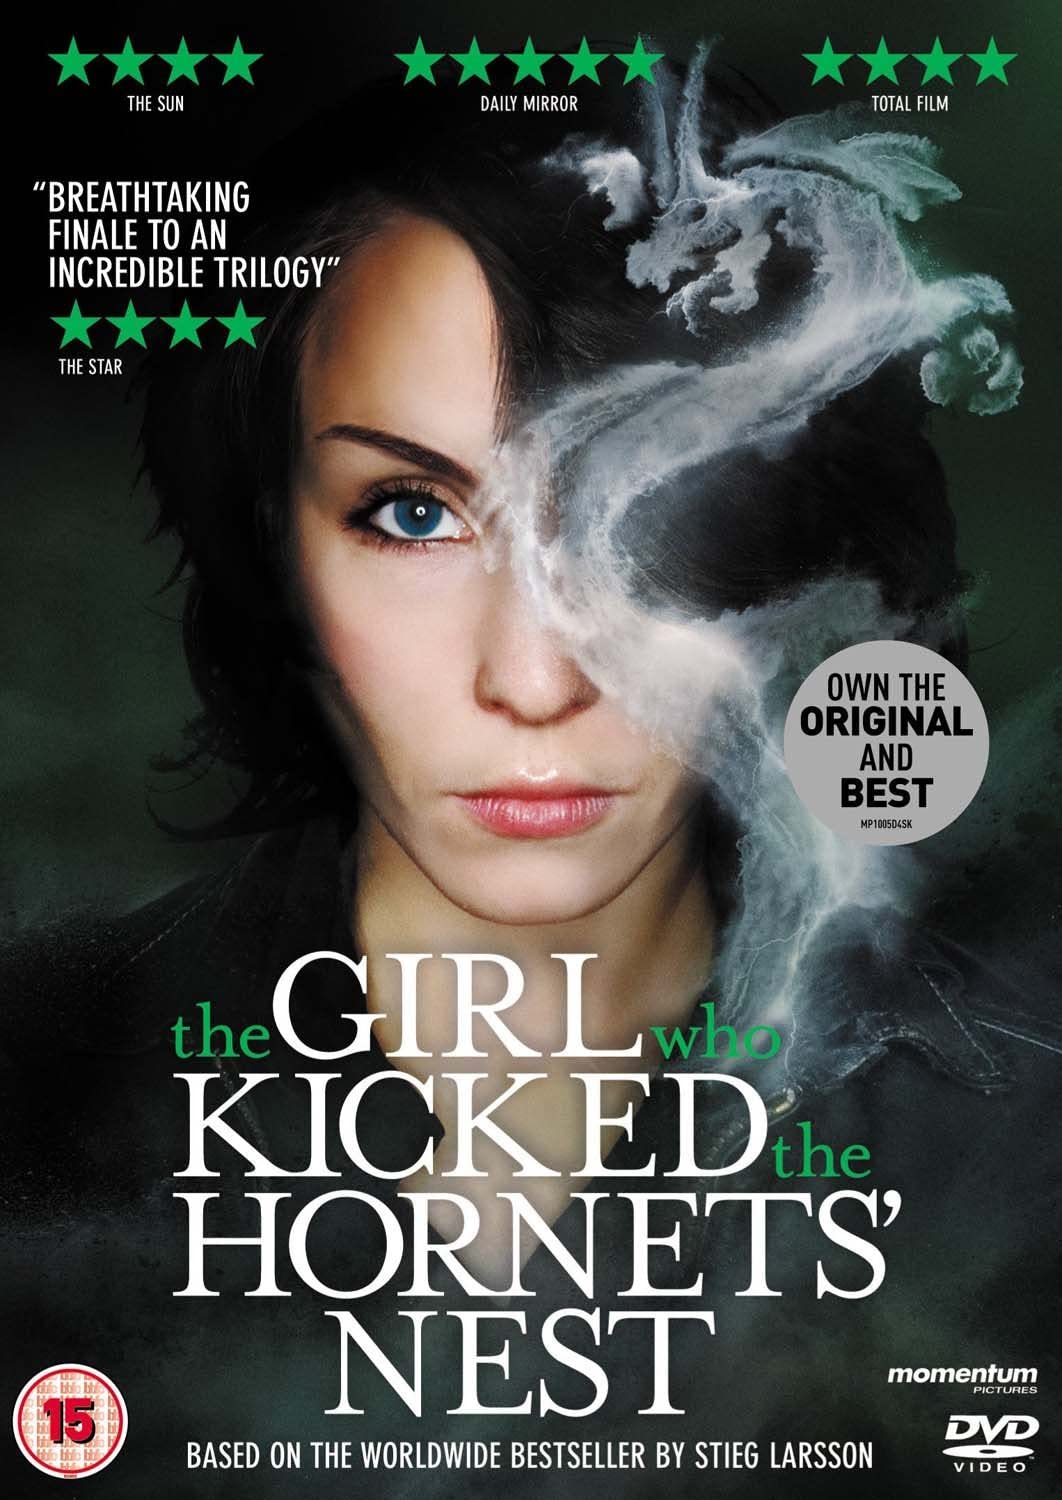 The Girl Who Kicked the Hornets' Nest [2010] - Thriller/Drama [DVD]